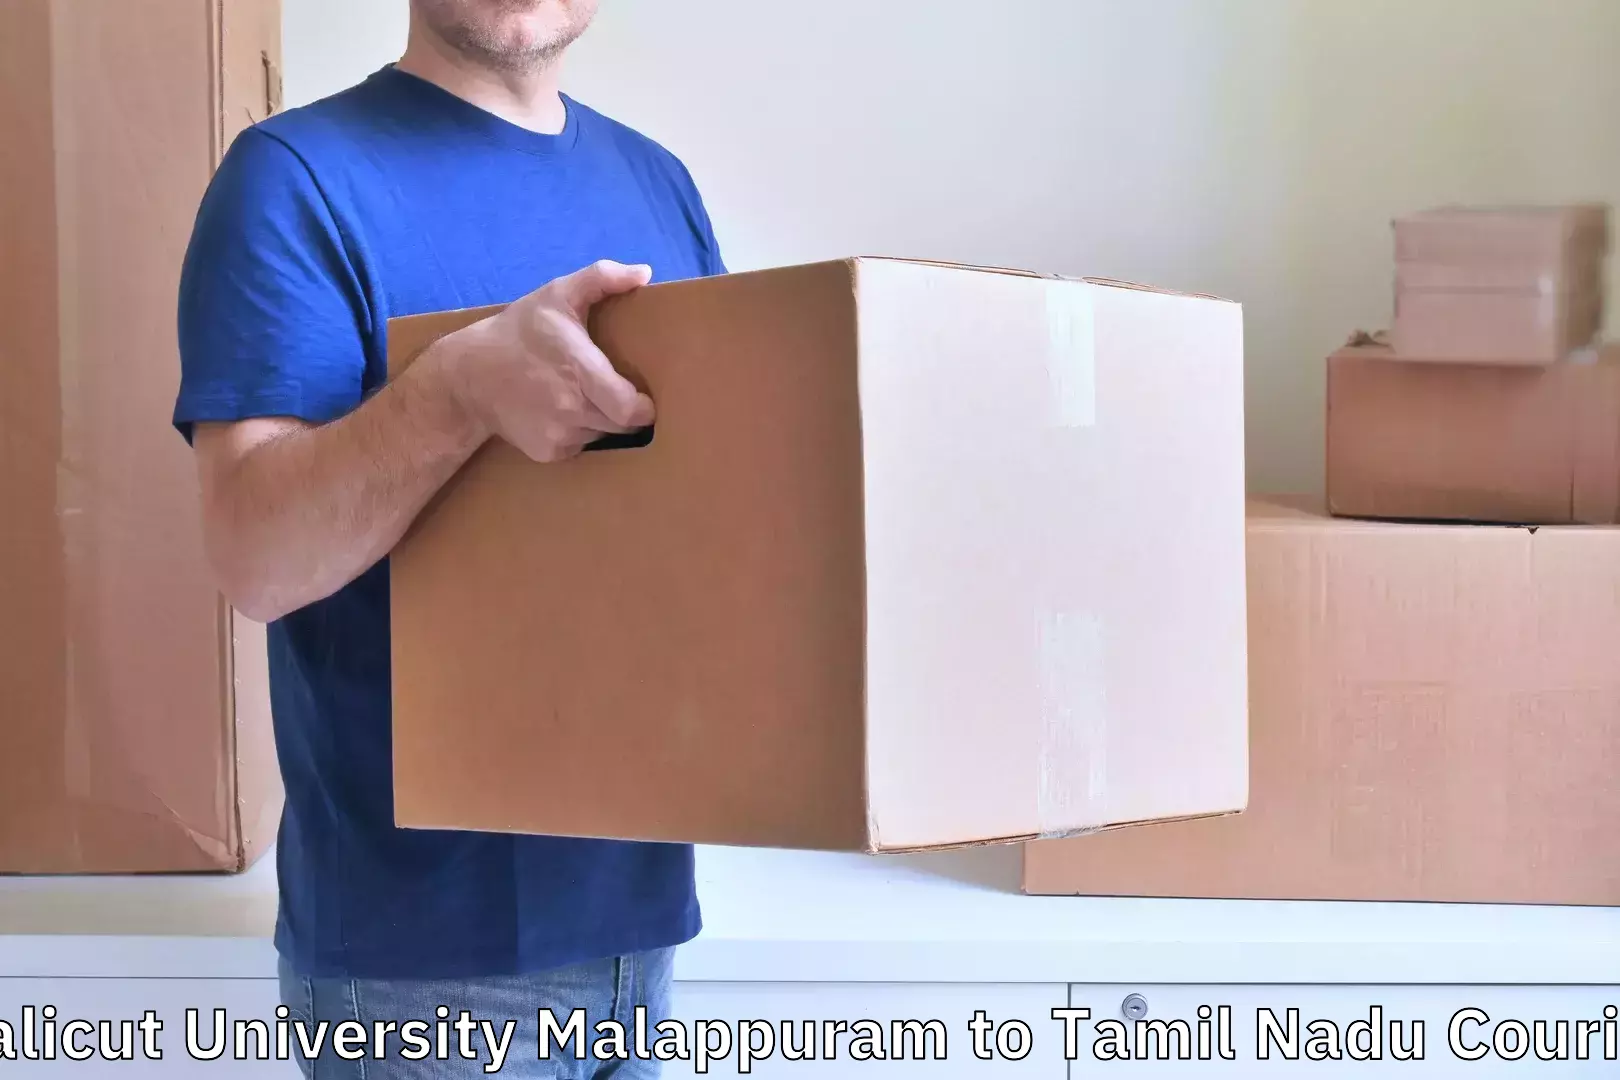 Personal baggage courier Calicut University Malappuram to Chengalpattu